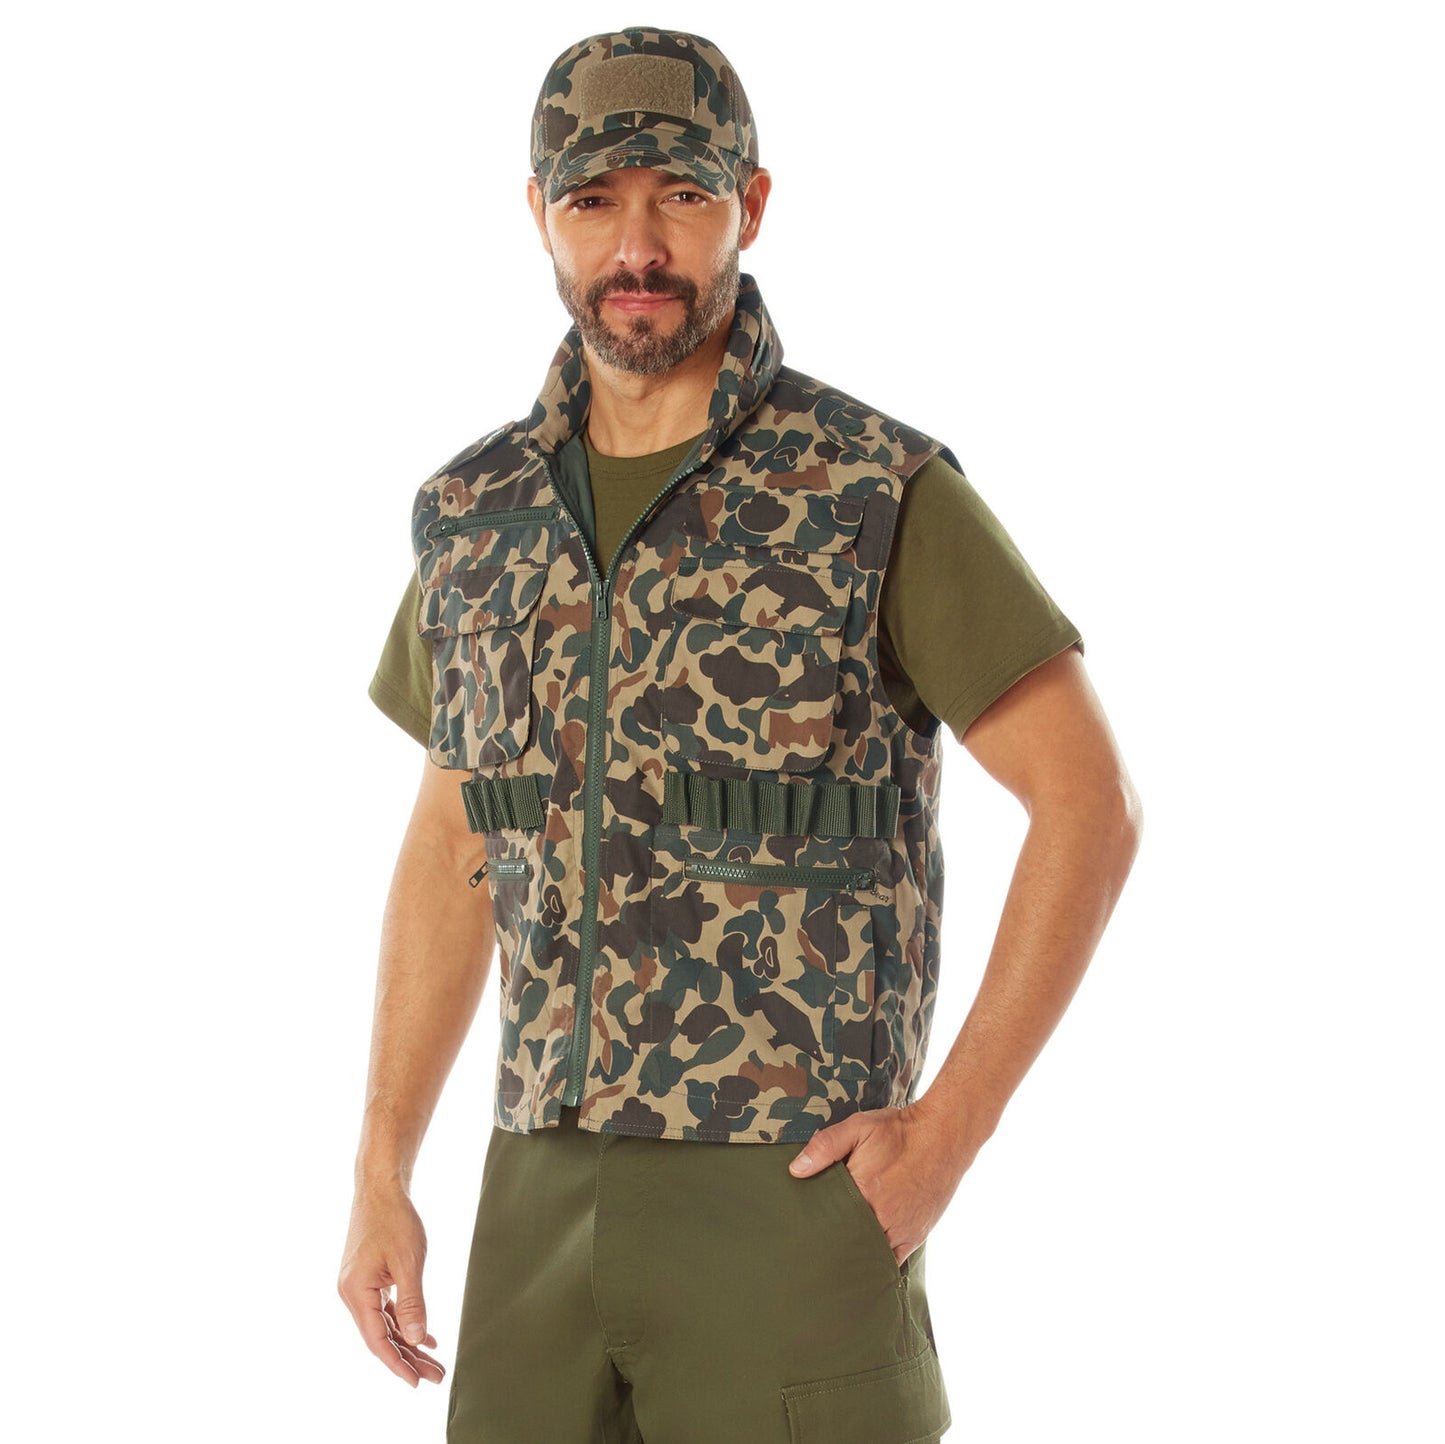 Rothco X Bear Archery Fred Bear Camo Ranger Vest - Tactical Vest w10 Pockets